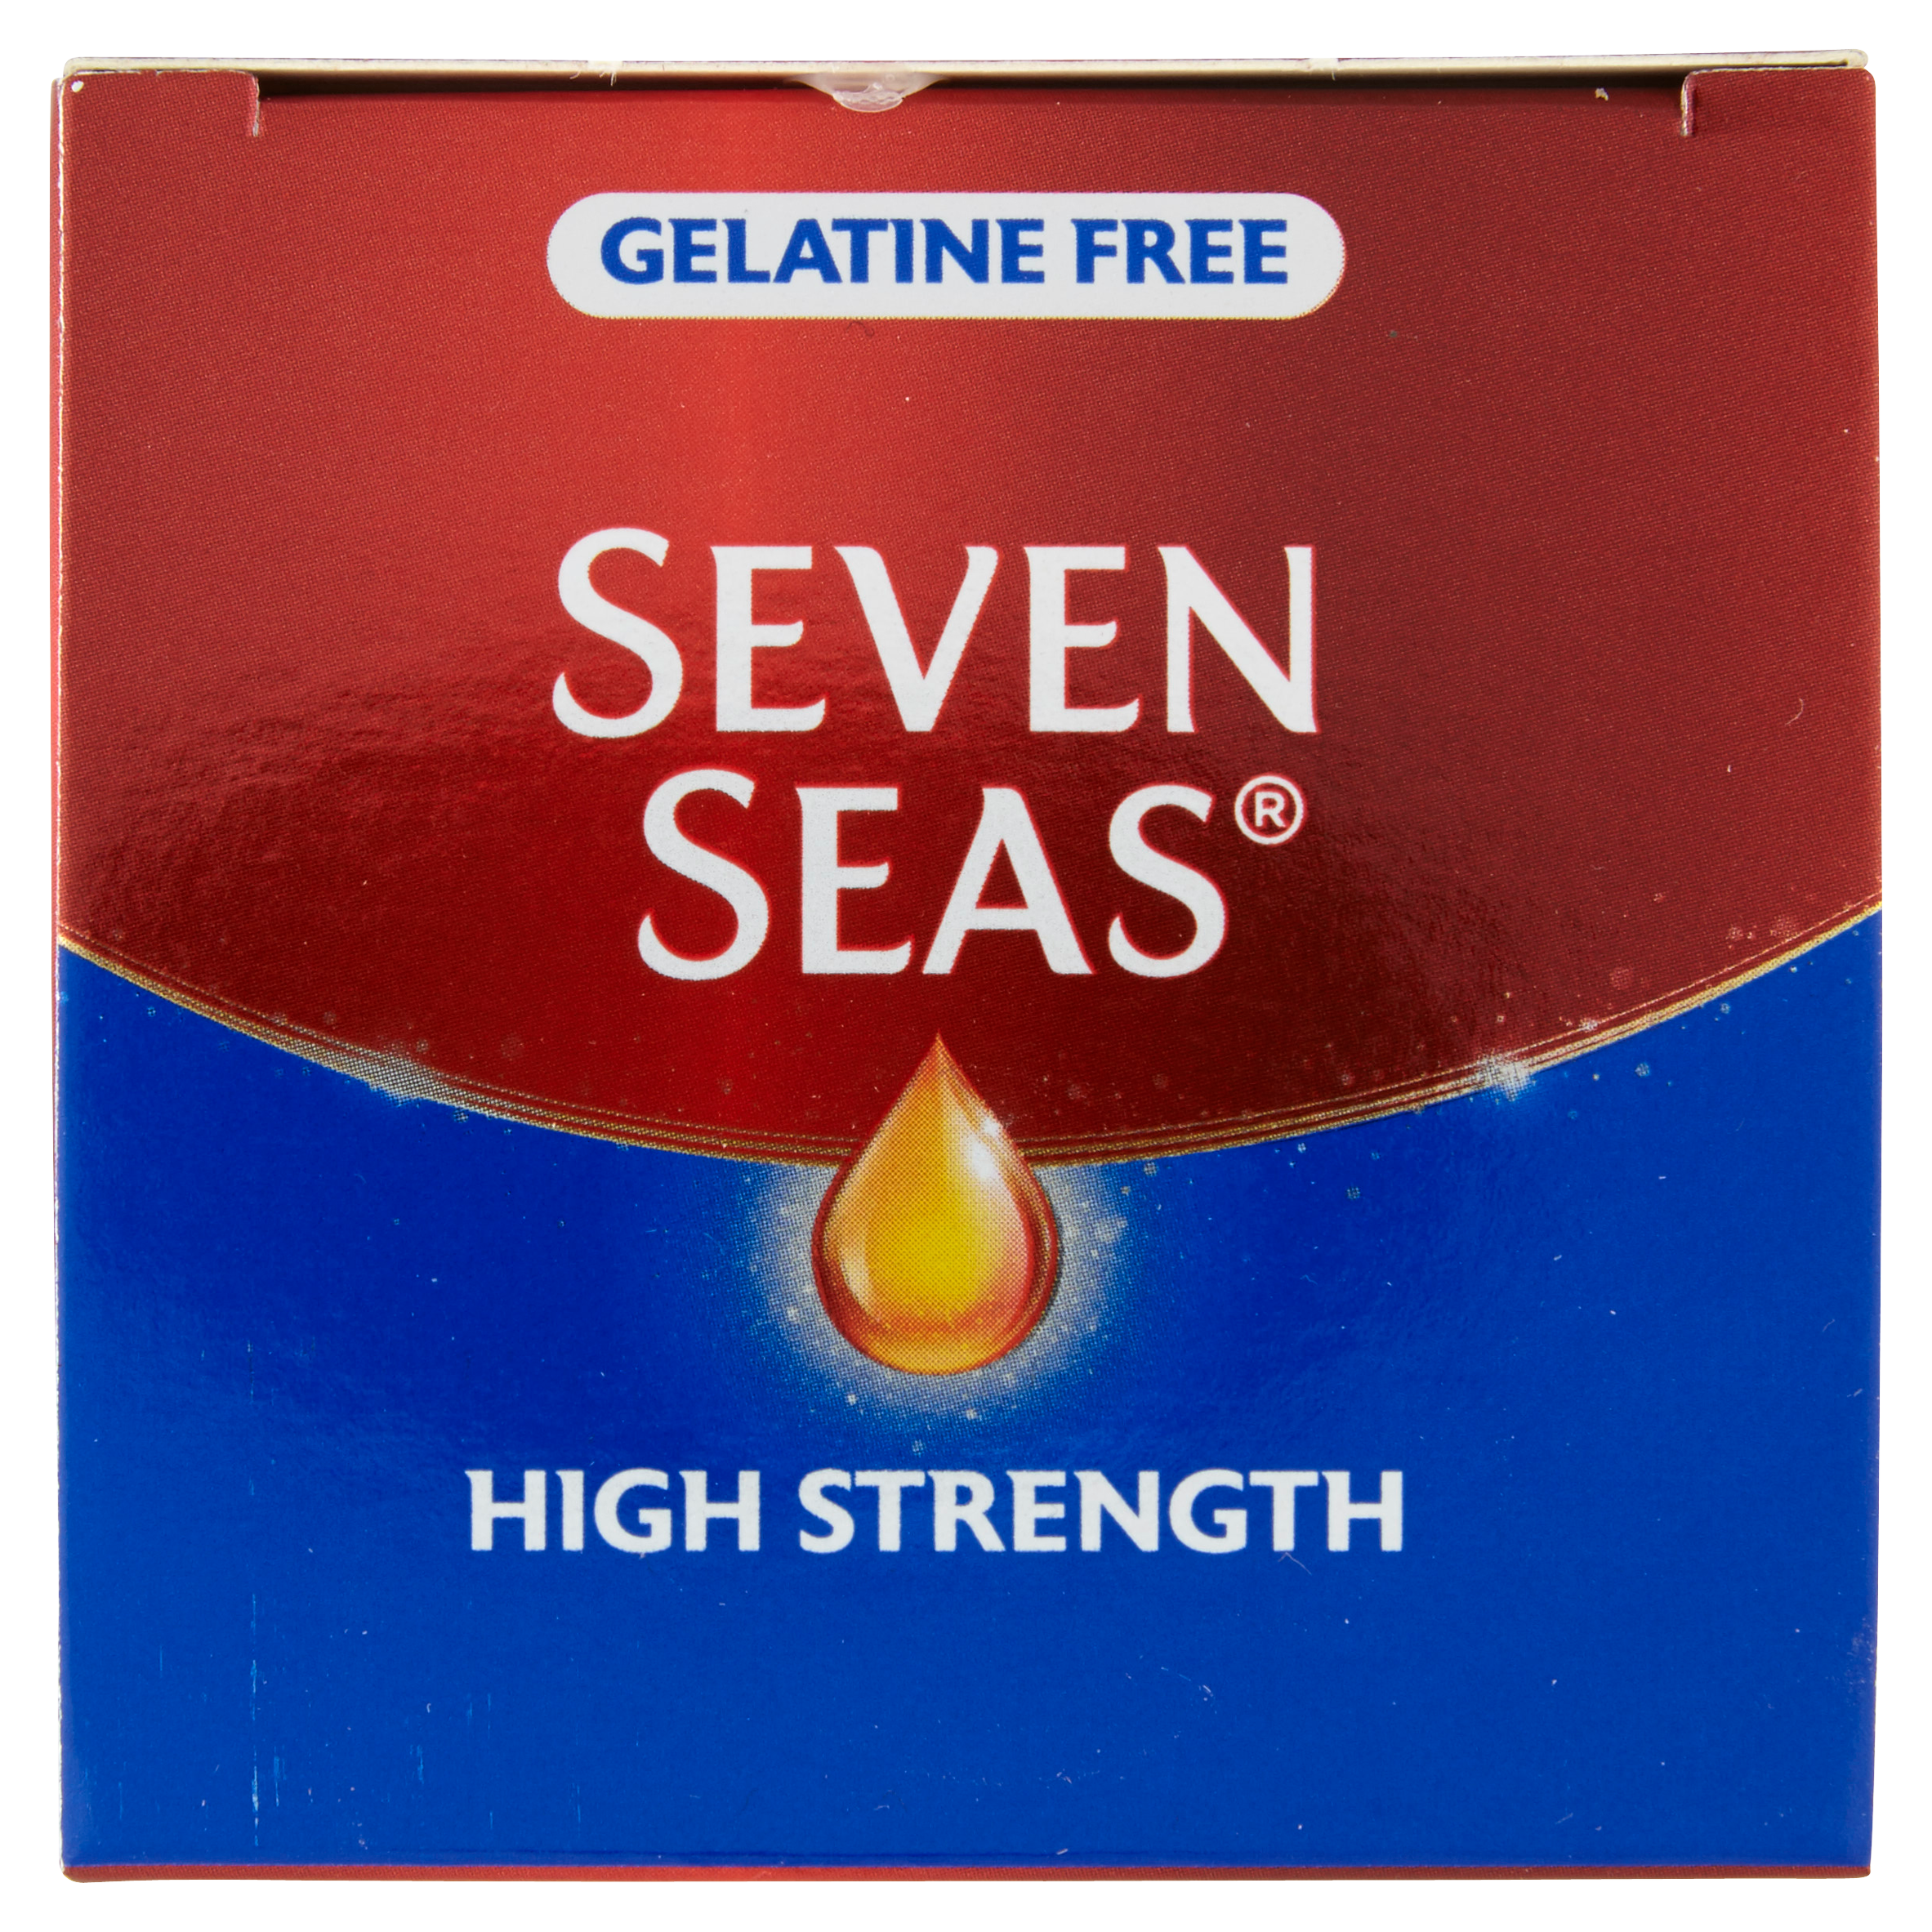 Seven Seas High Strength Gelatine Free Capsules